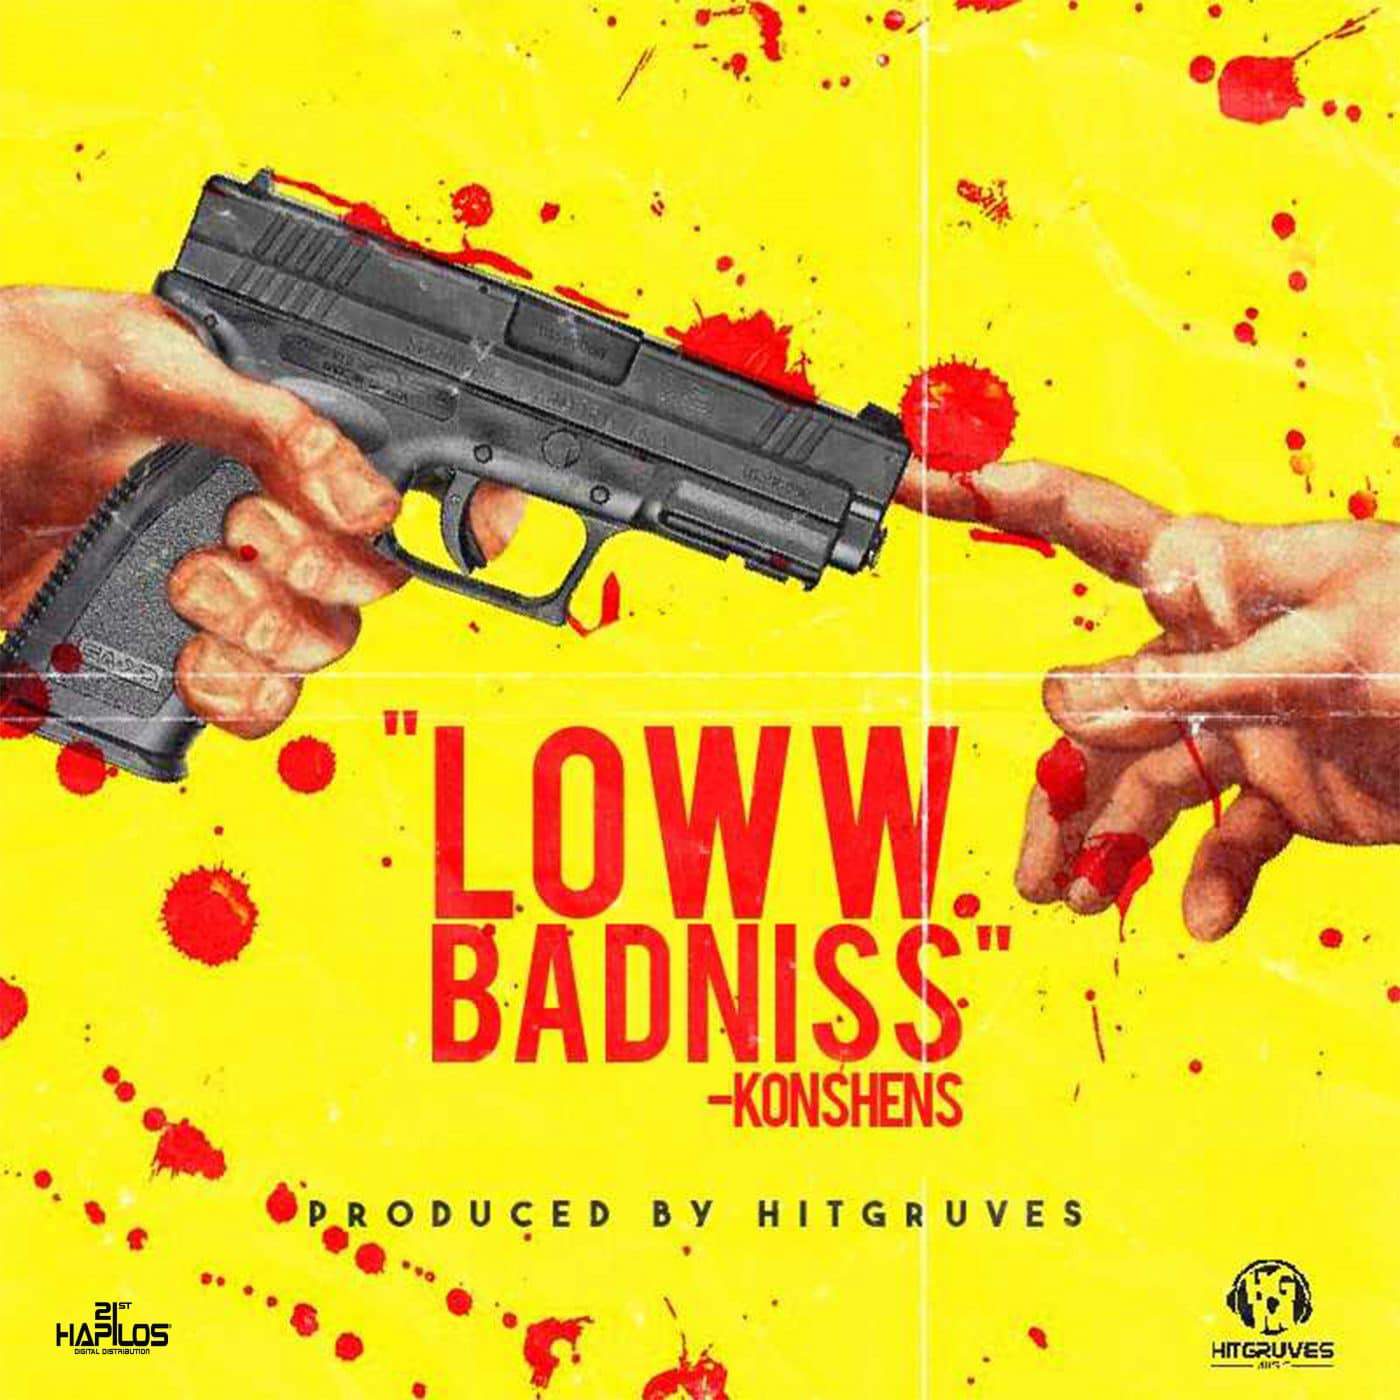 Konshens - Loww Badniss - Hitgruves Music - 21st Hapilos